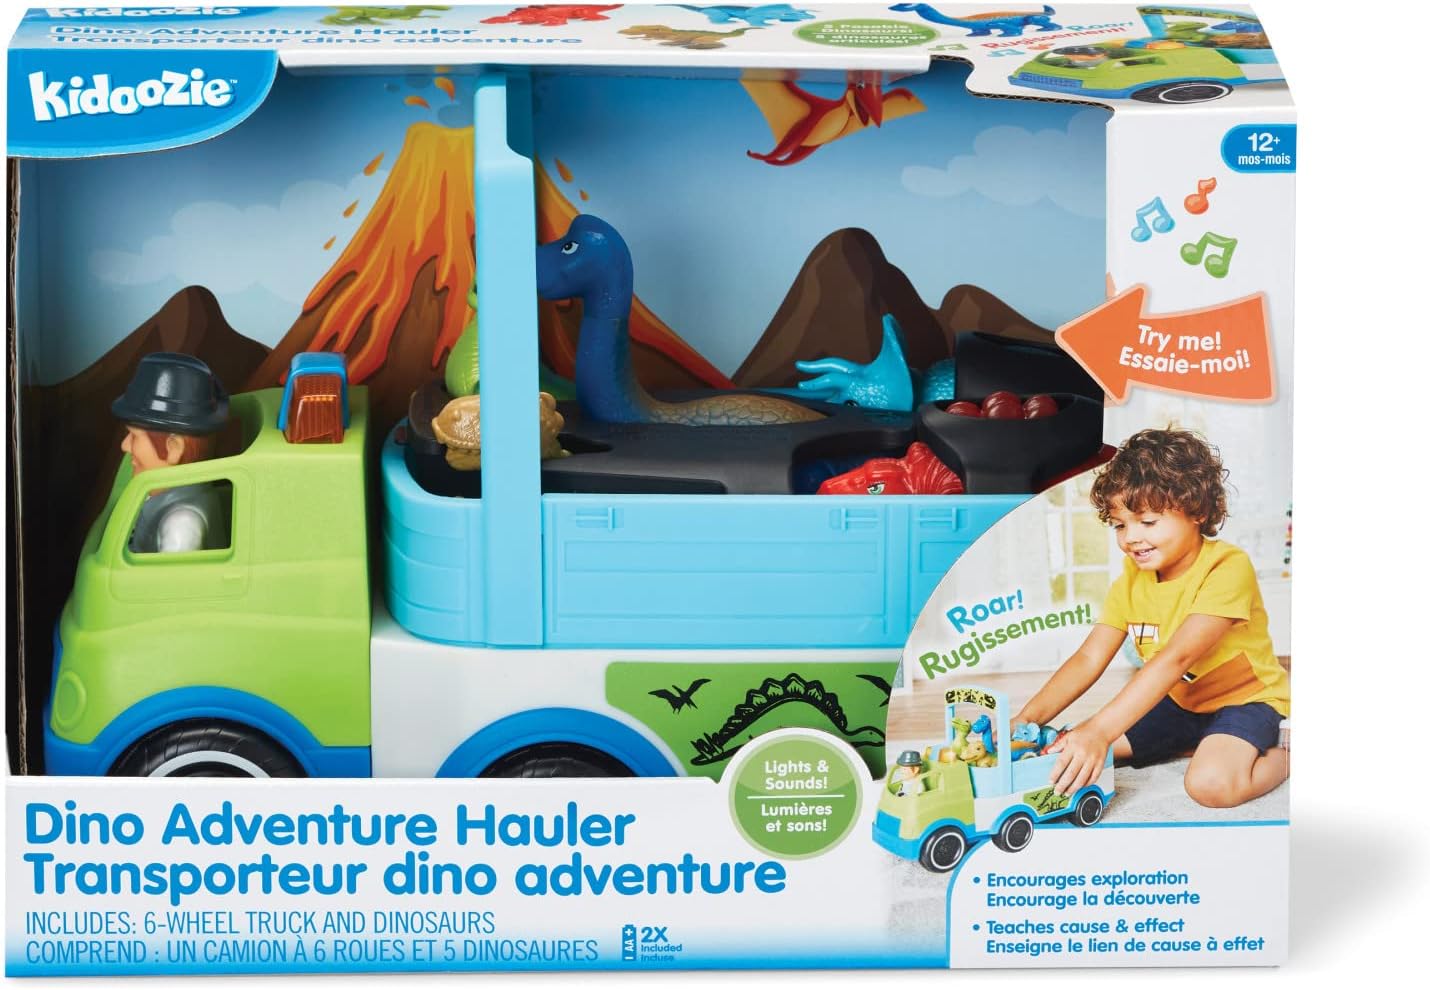 Kidoozie Dino Adventure Hauler